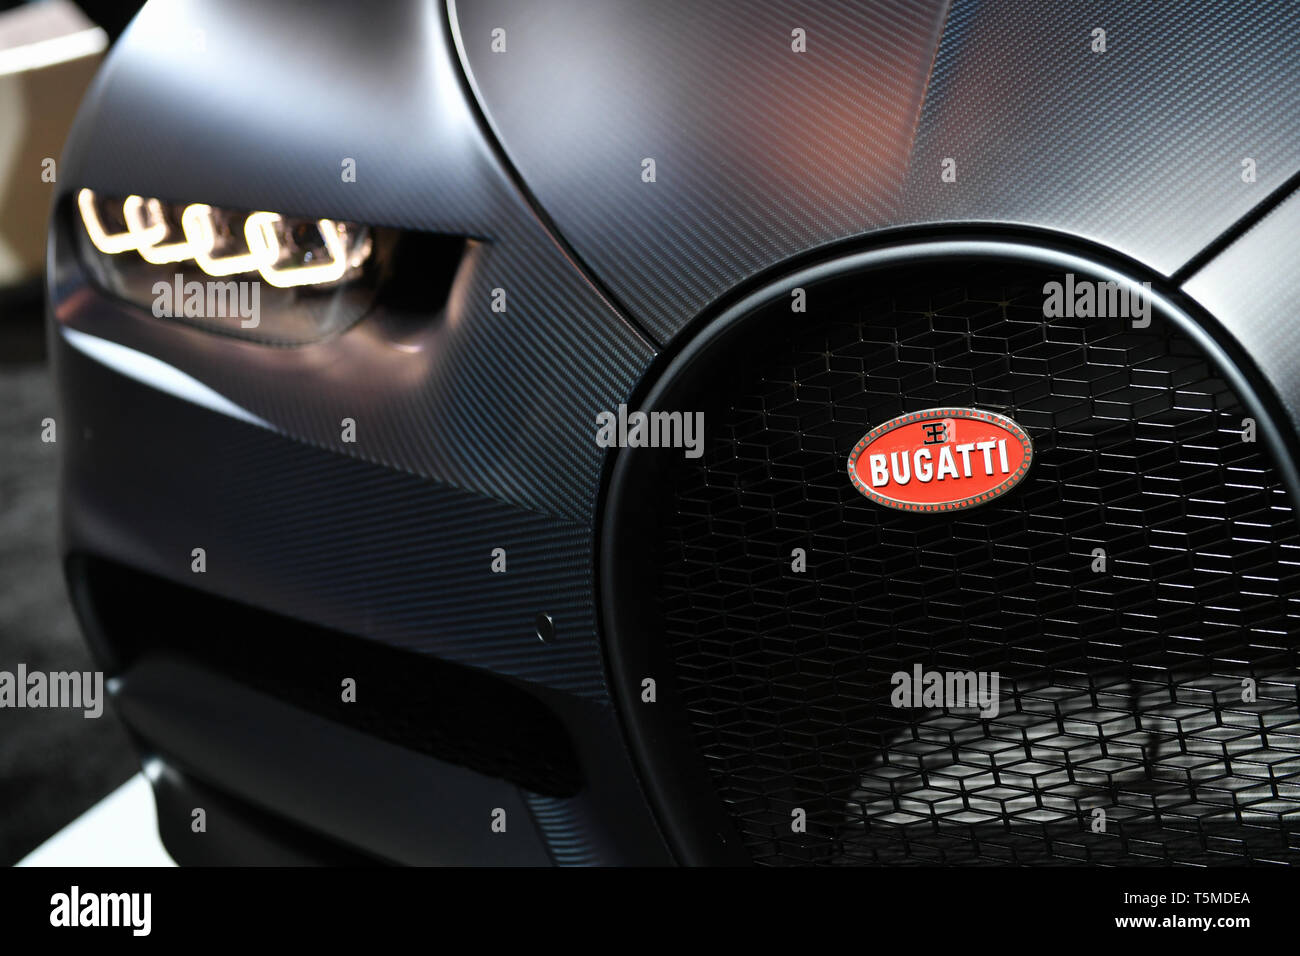 Bugatti Veyron en Lego Technic : elle a tout de la grande